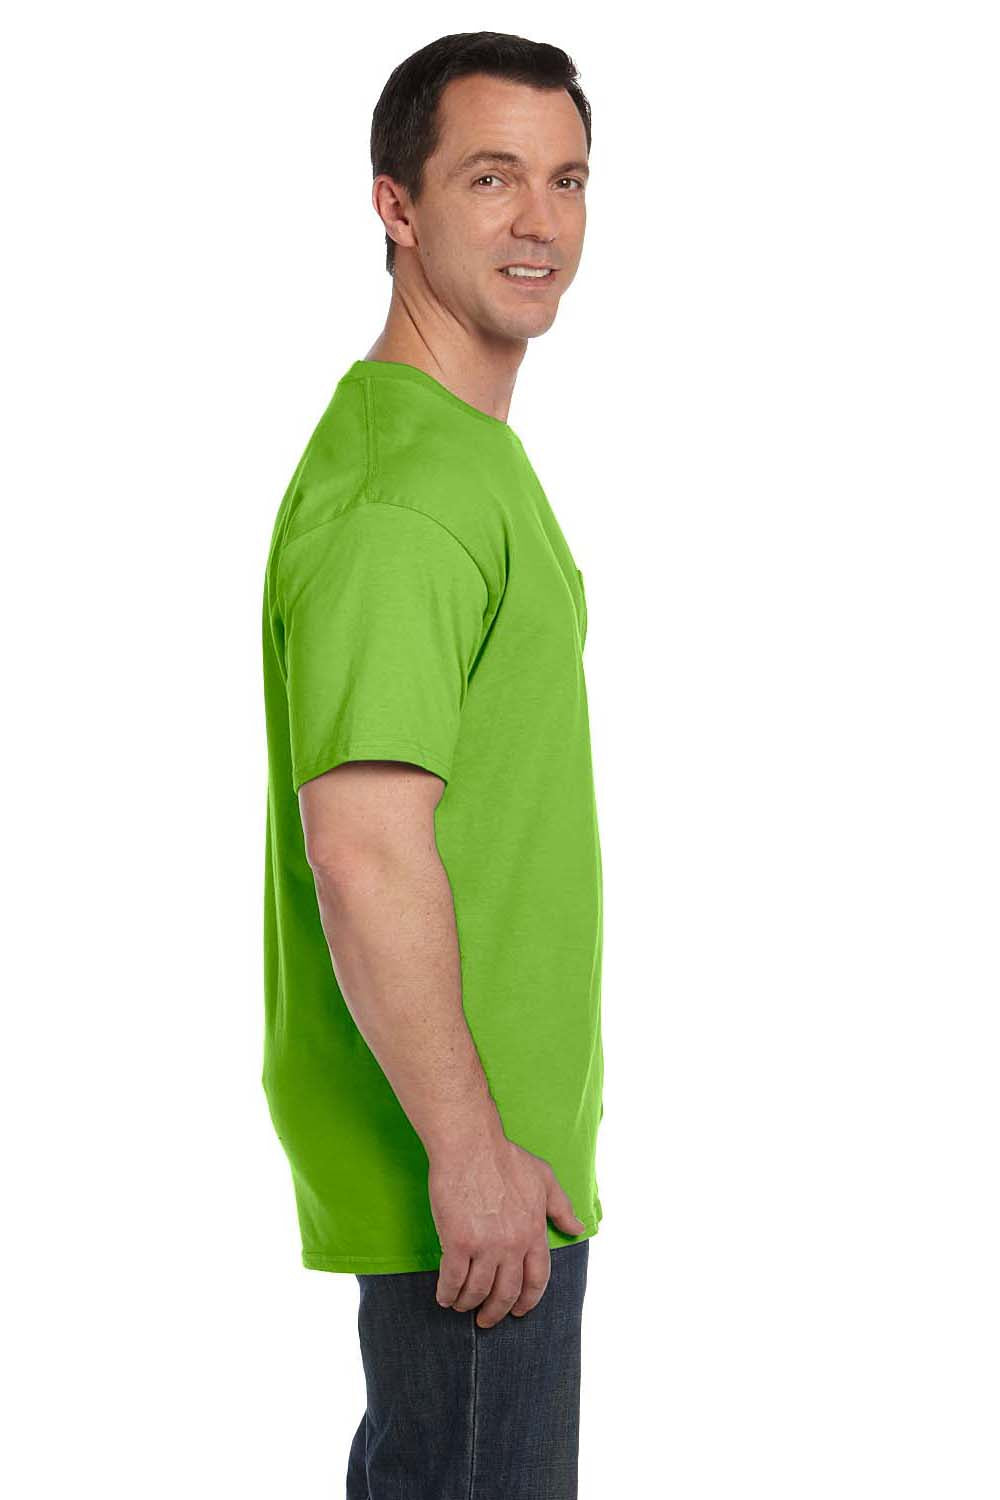 Hanes 5190P Mens Beefy-T Short Sleeve Crewneck T-Shirt w/ Pocket Lime Green Side